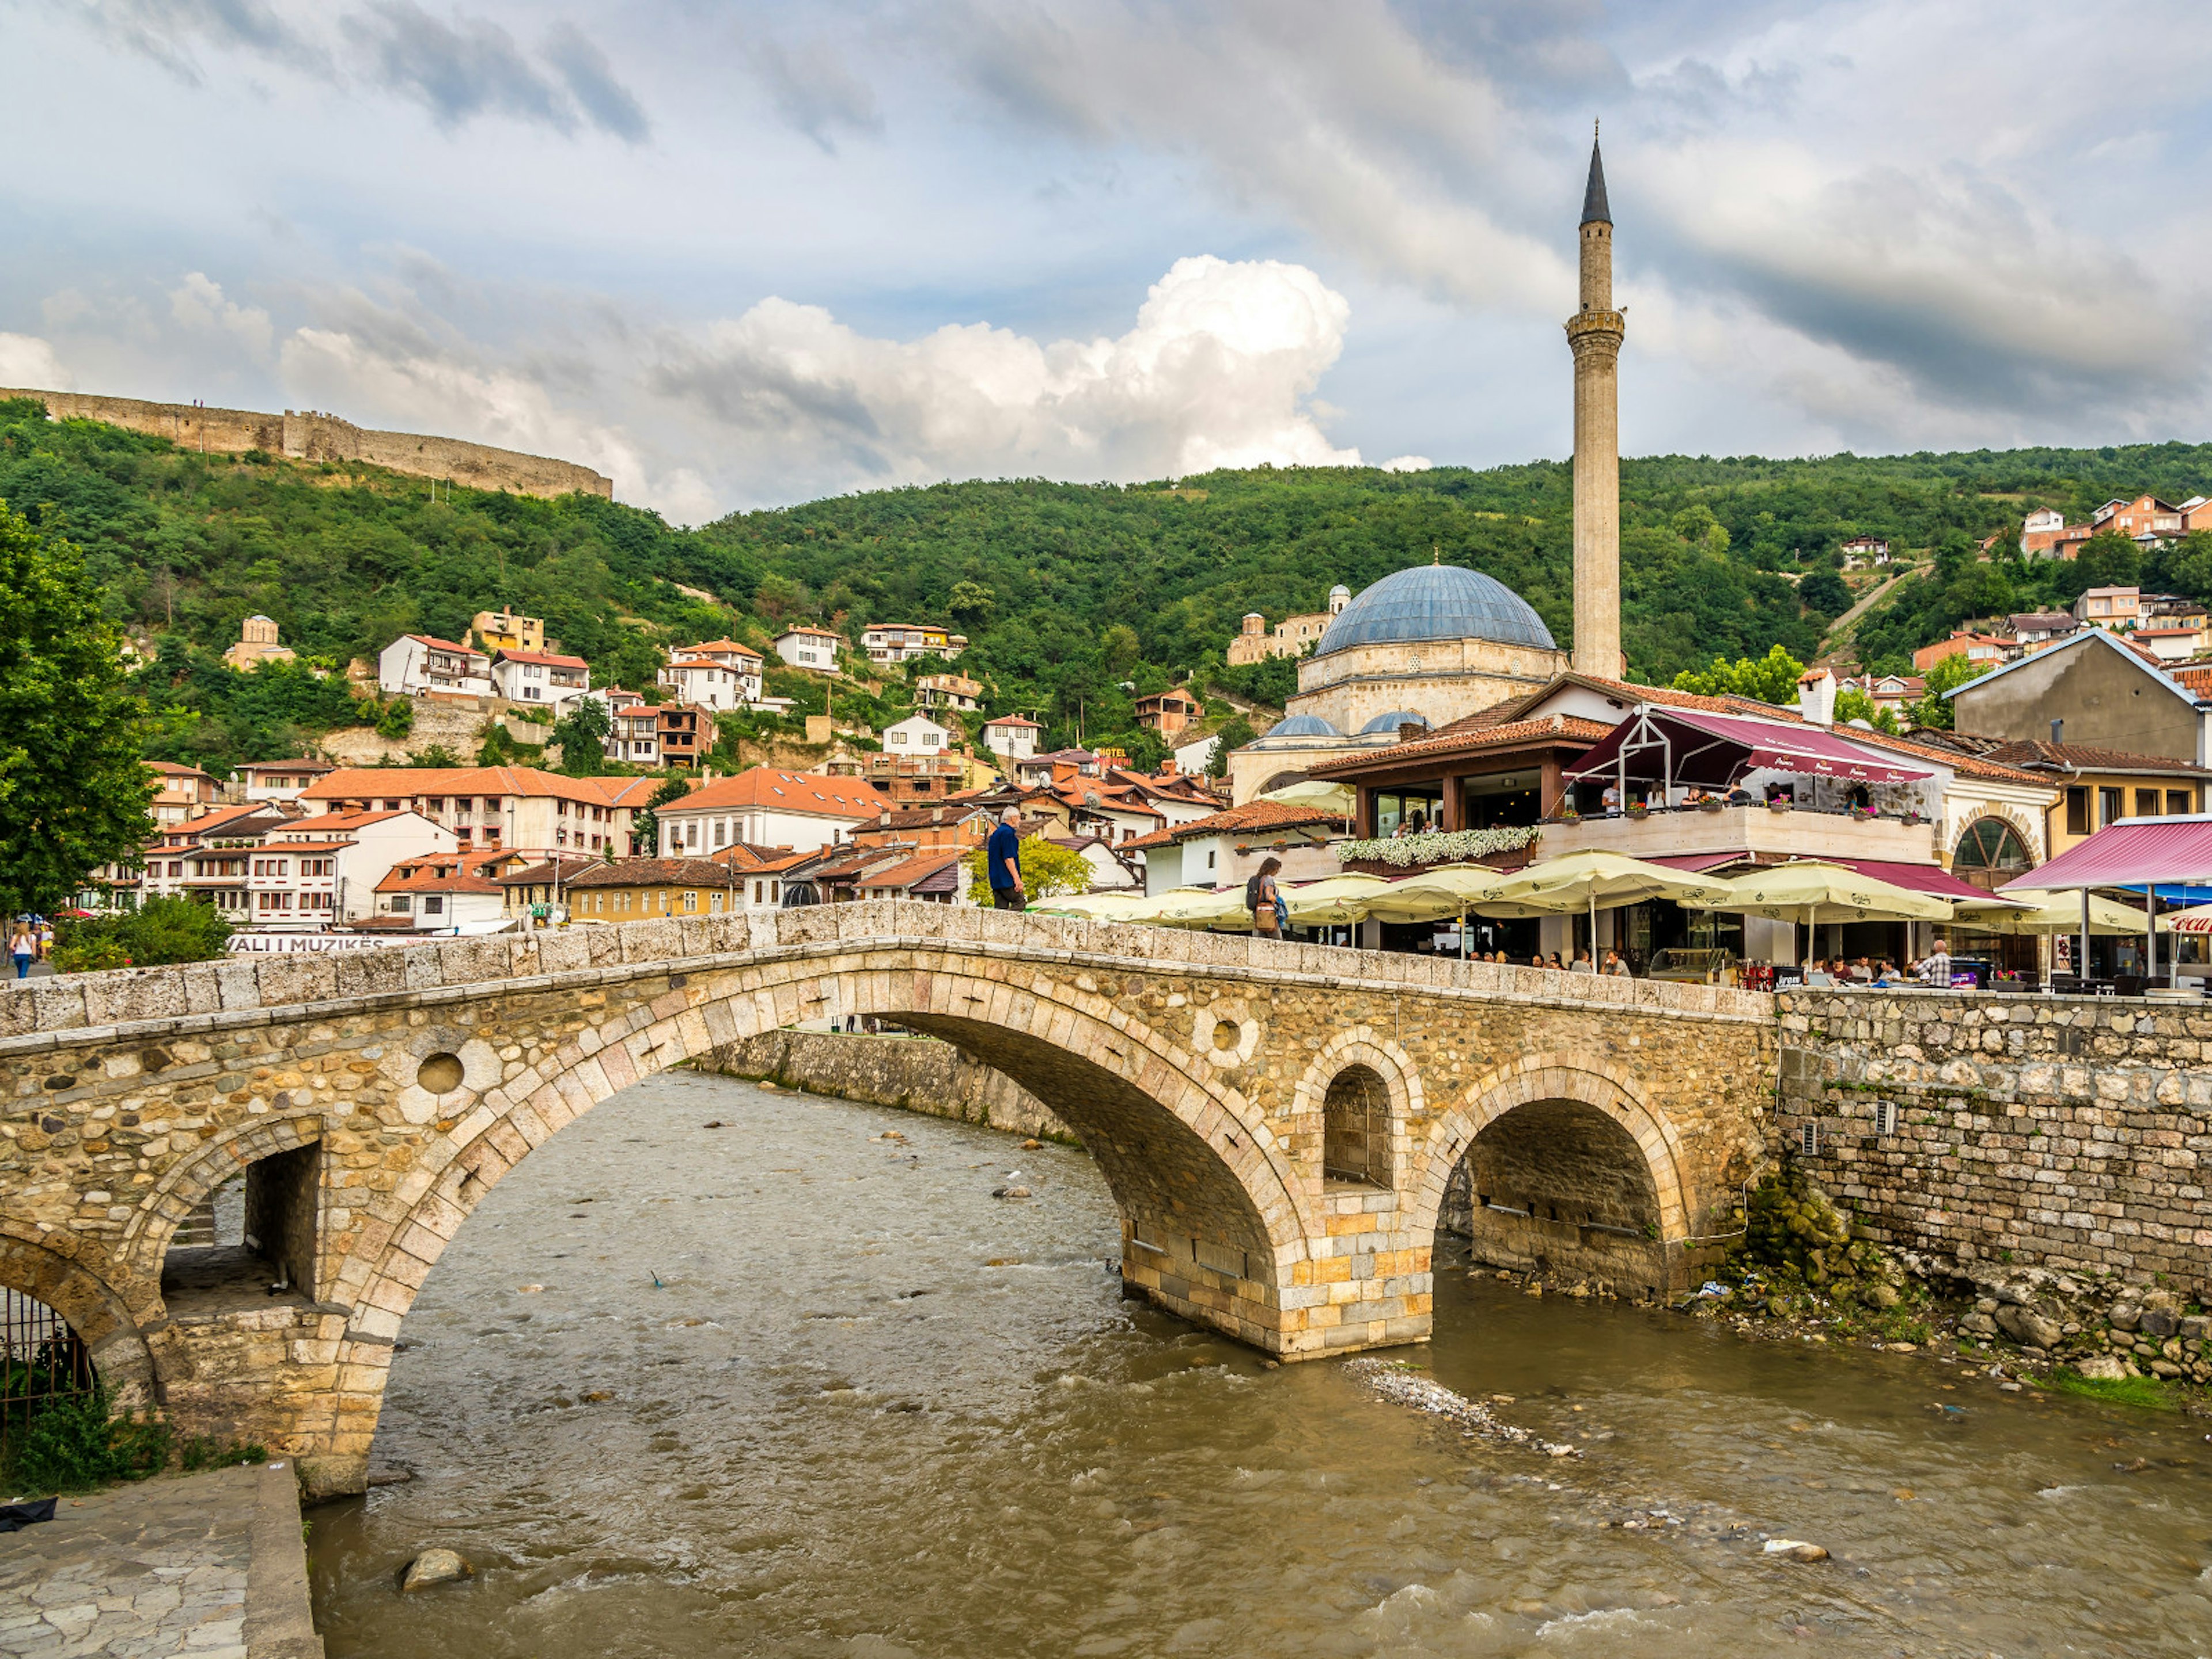 The Ottoman-era Sinan Pasha Mosque and stone bridge in the heart of Prizren's old town © milosk50 / Shutterstock